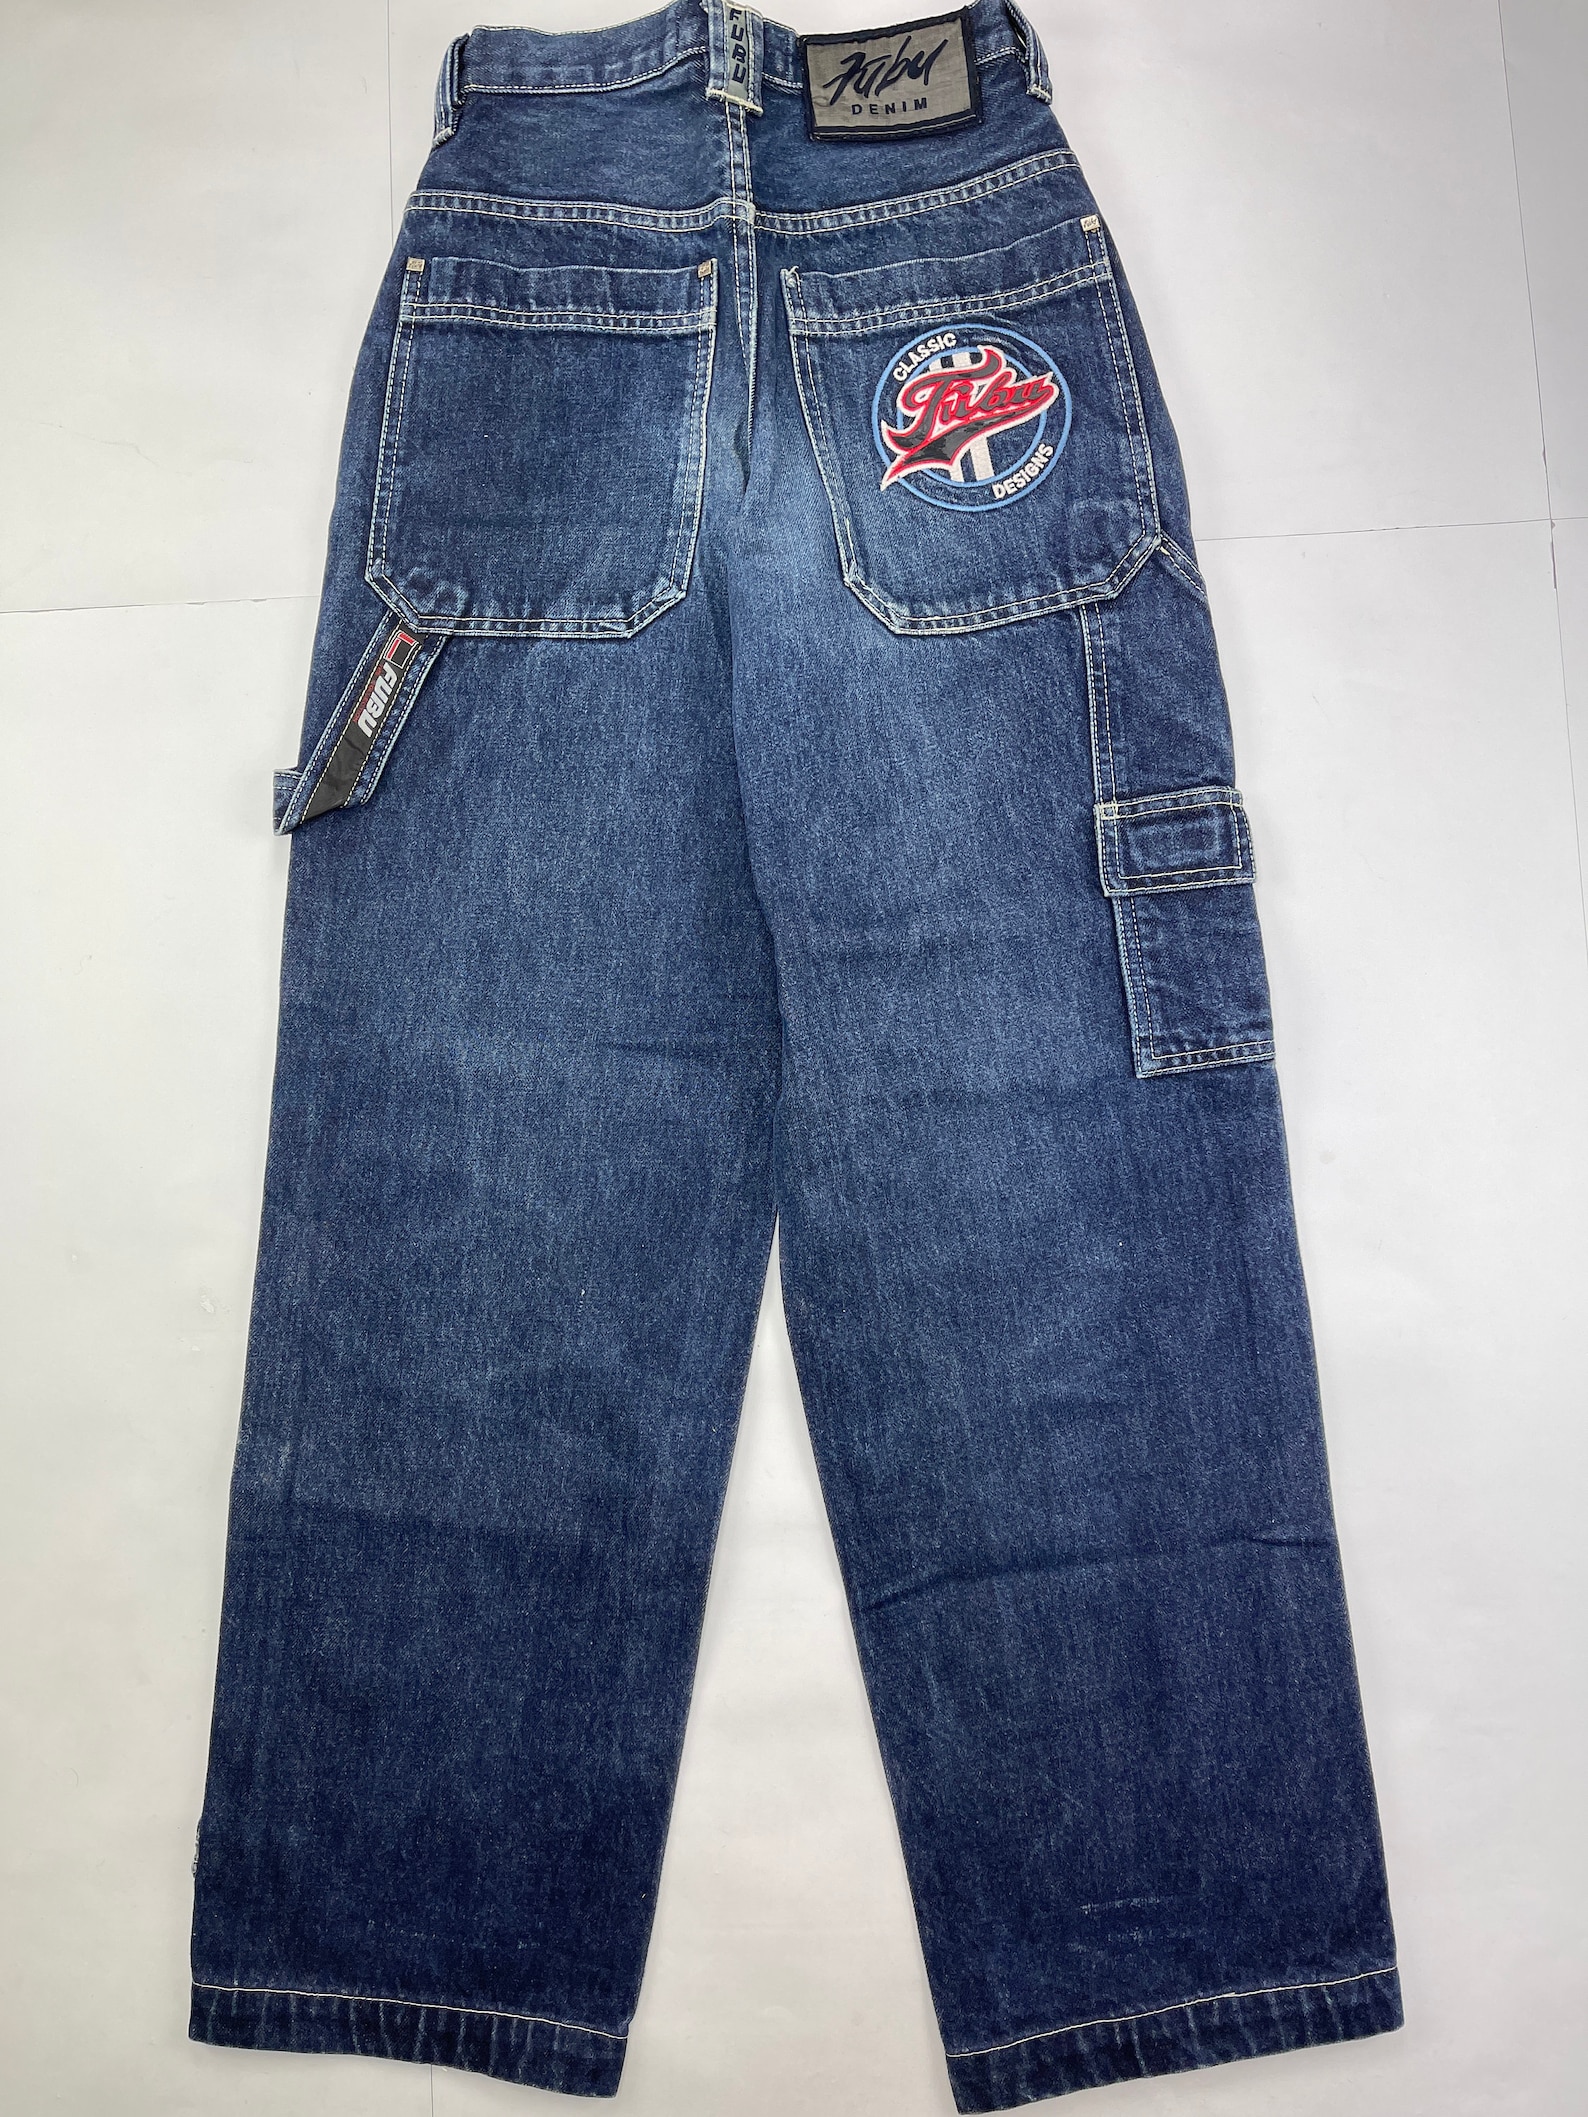 FUBU jeans blue vintage baggy jeans carpenter loose fit 90s | Etsy